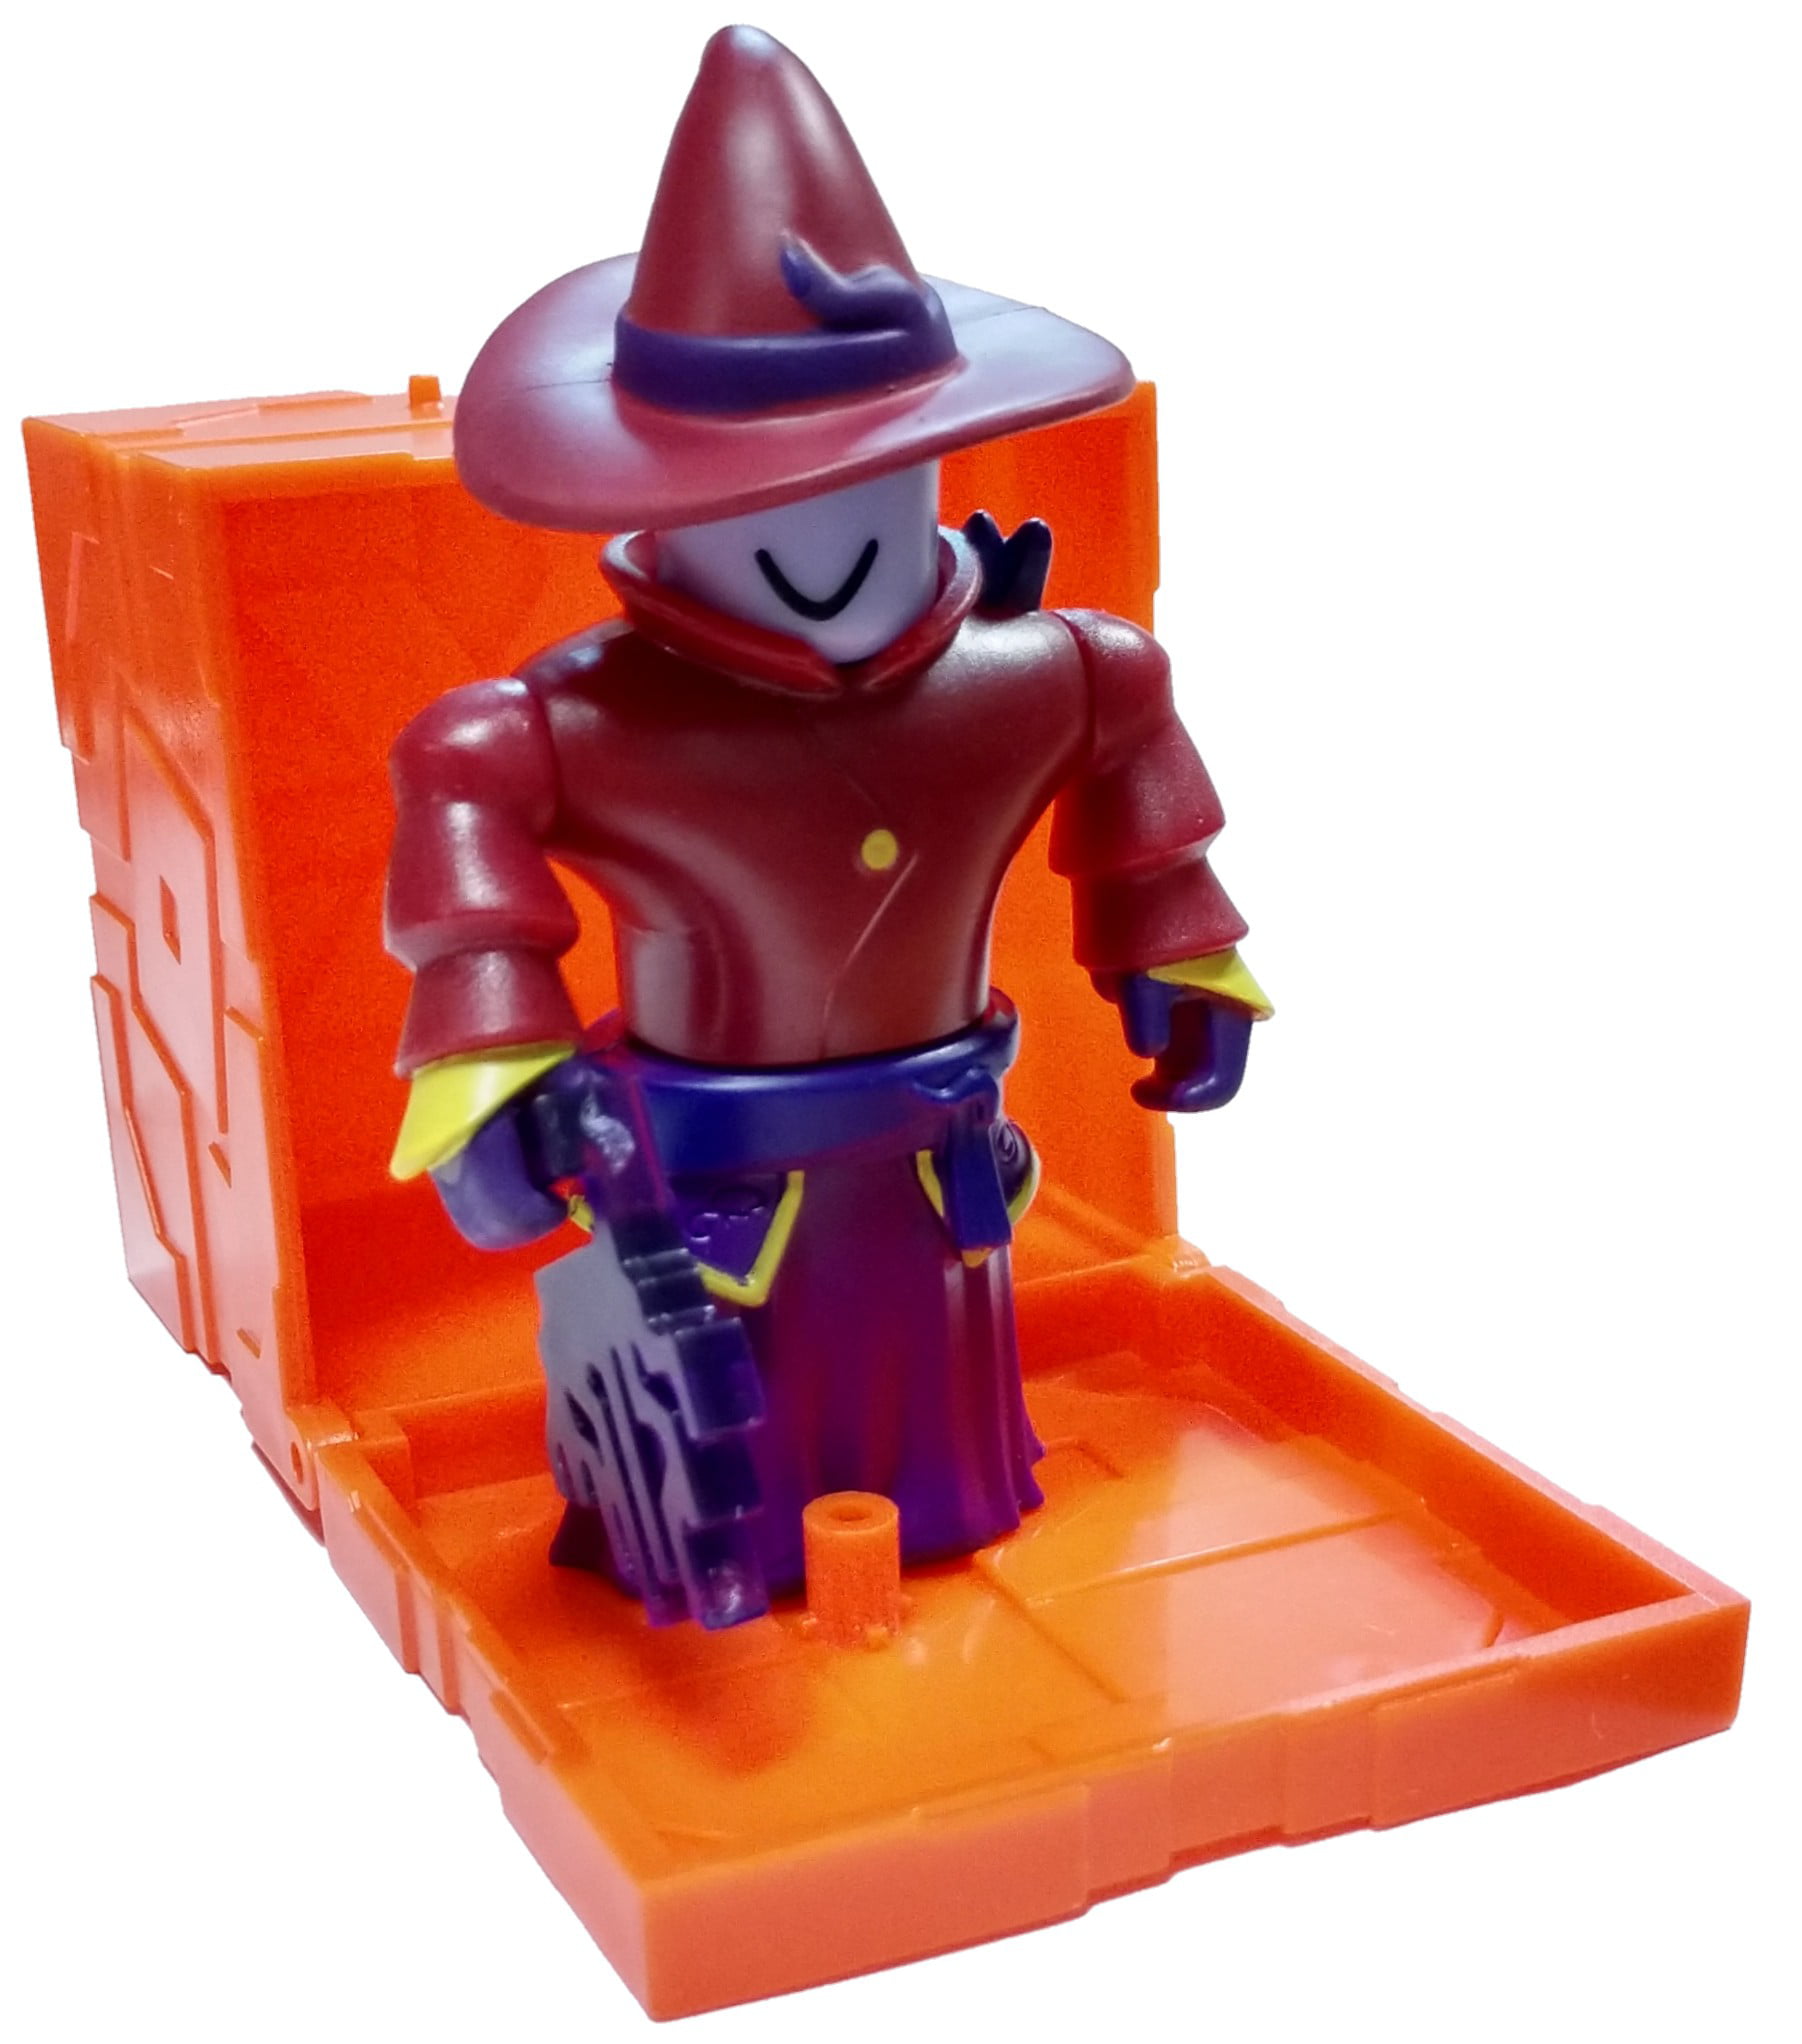 Roblox Series 6 Dread Dark Wizard Mini Figure With Orange Cube And Online Code No Packaging Walmart Com Walmart Com - dark robe roblox